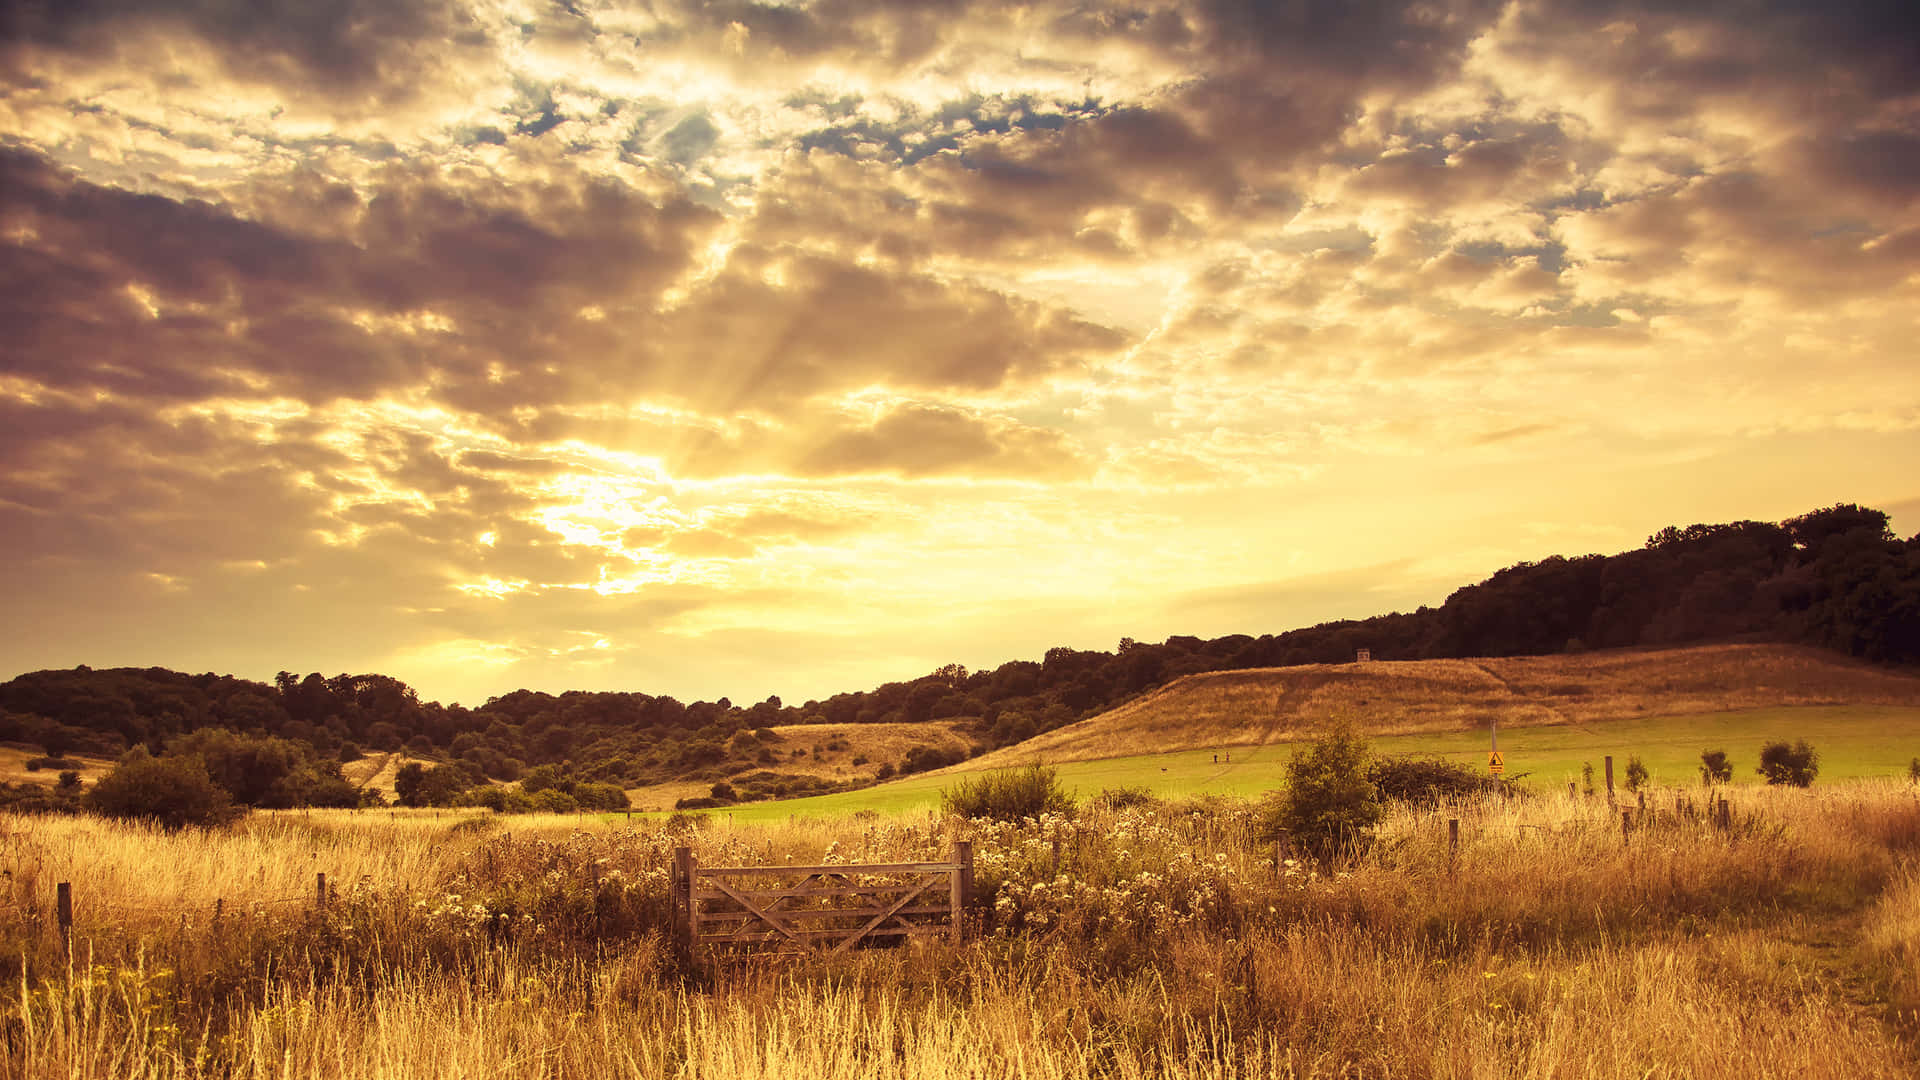 Golden Sunset Over Pastoral Landscape.jpg Wallpaper